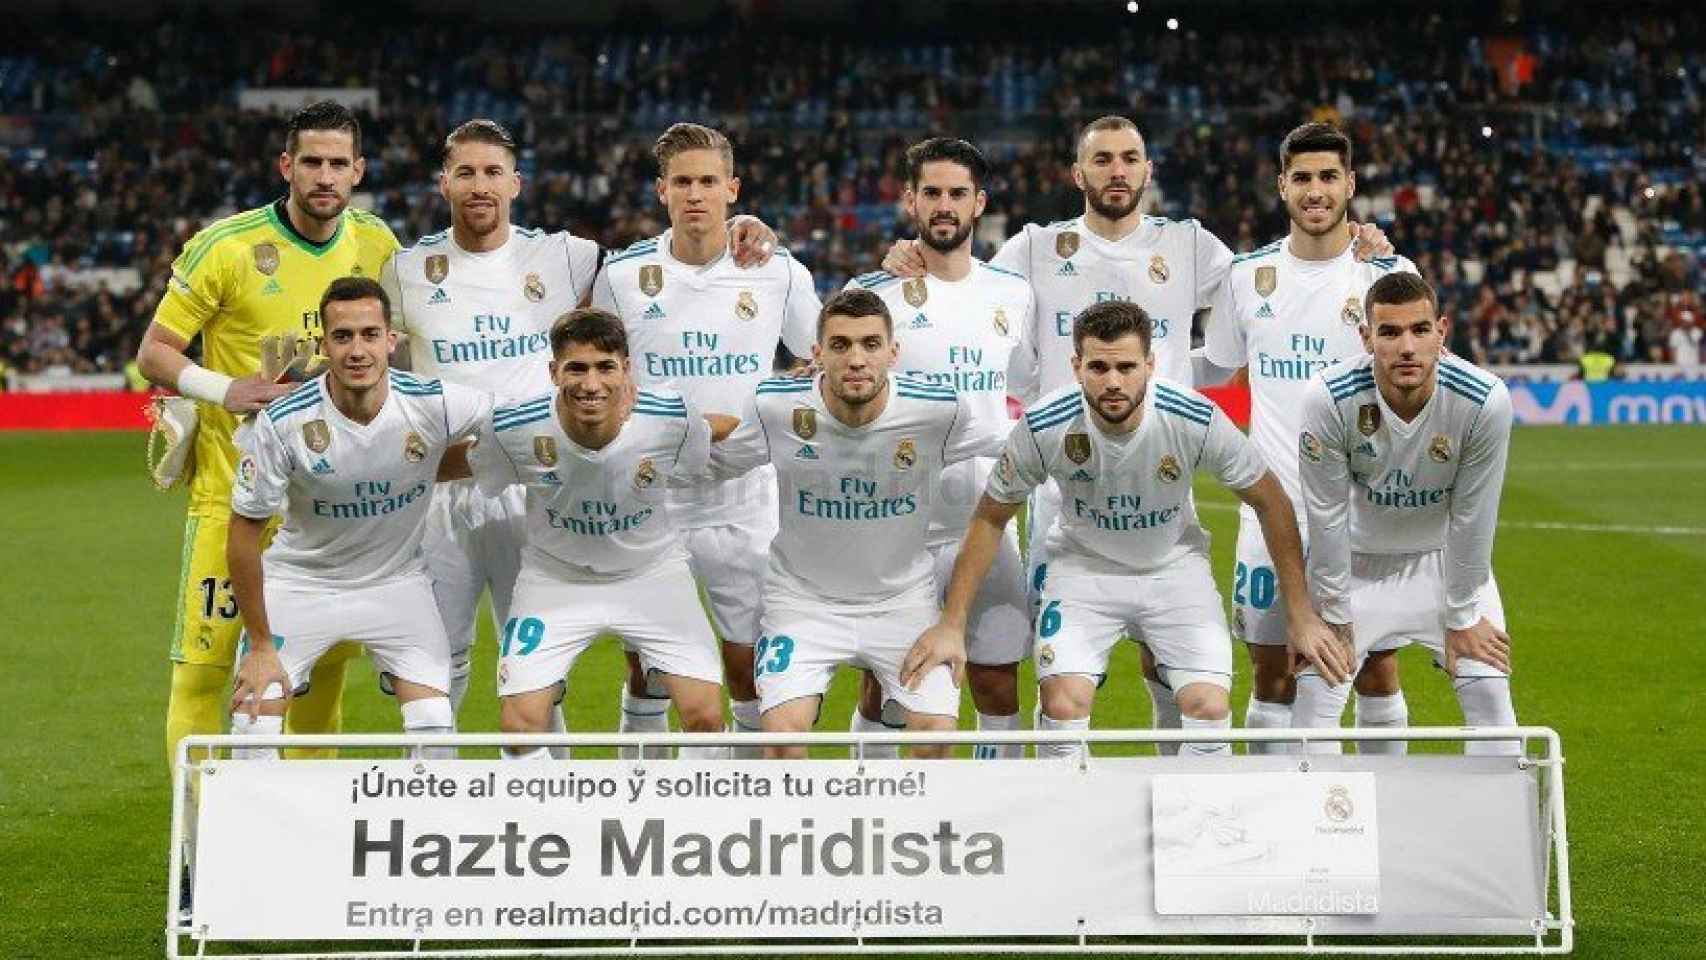 Once titular Real Madrid - Leganés